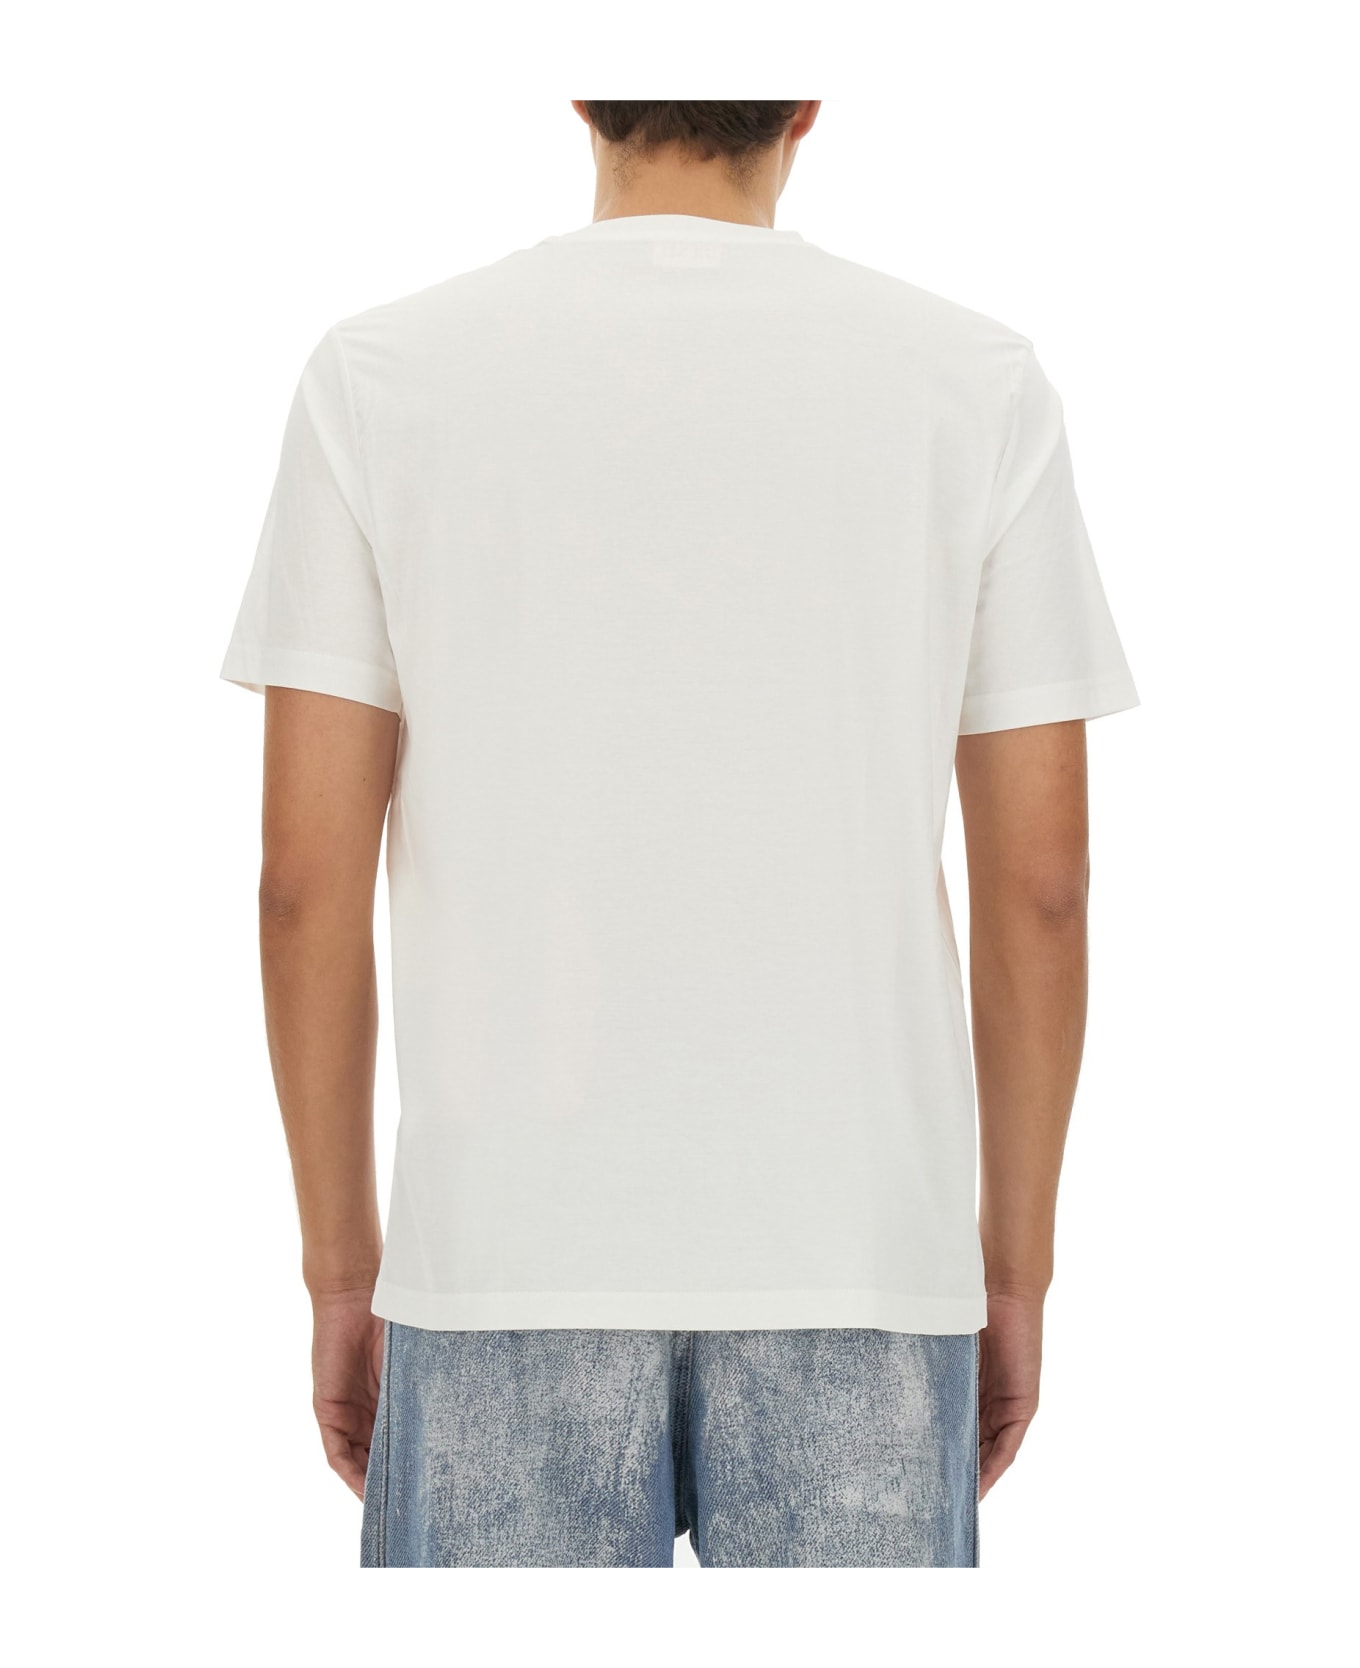 Diesel T-shirt With Logo - WHITE